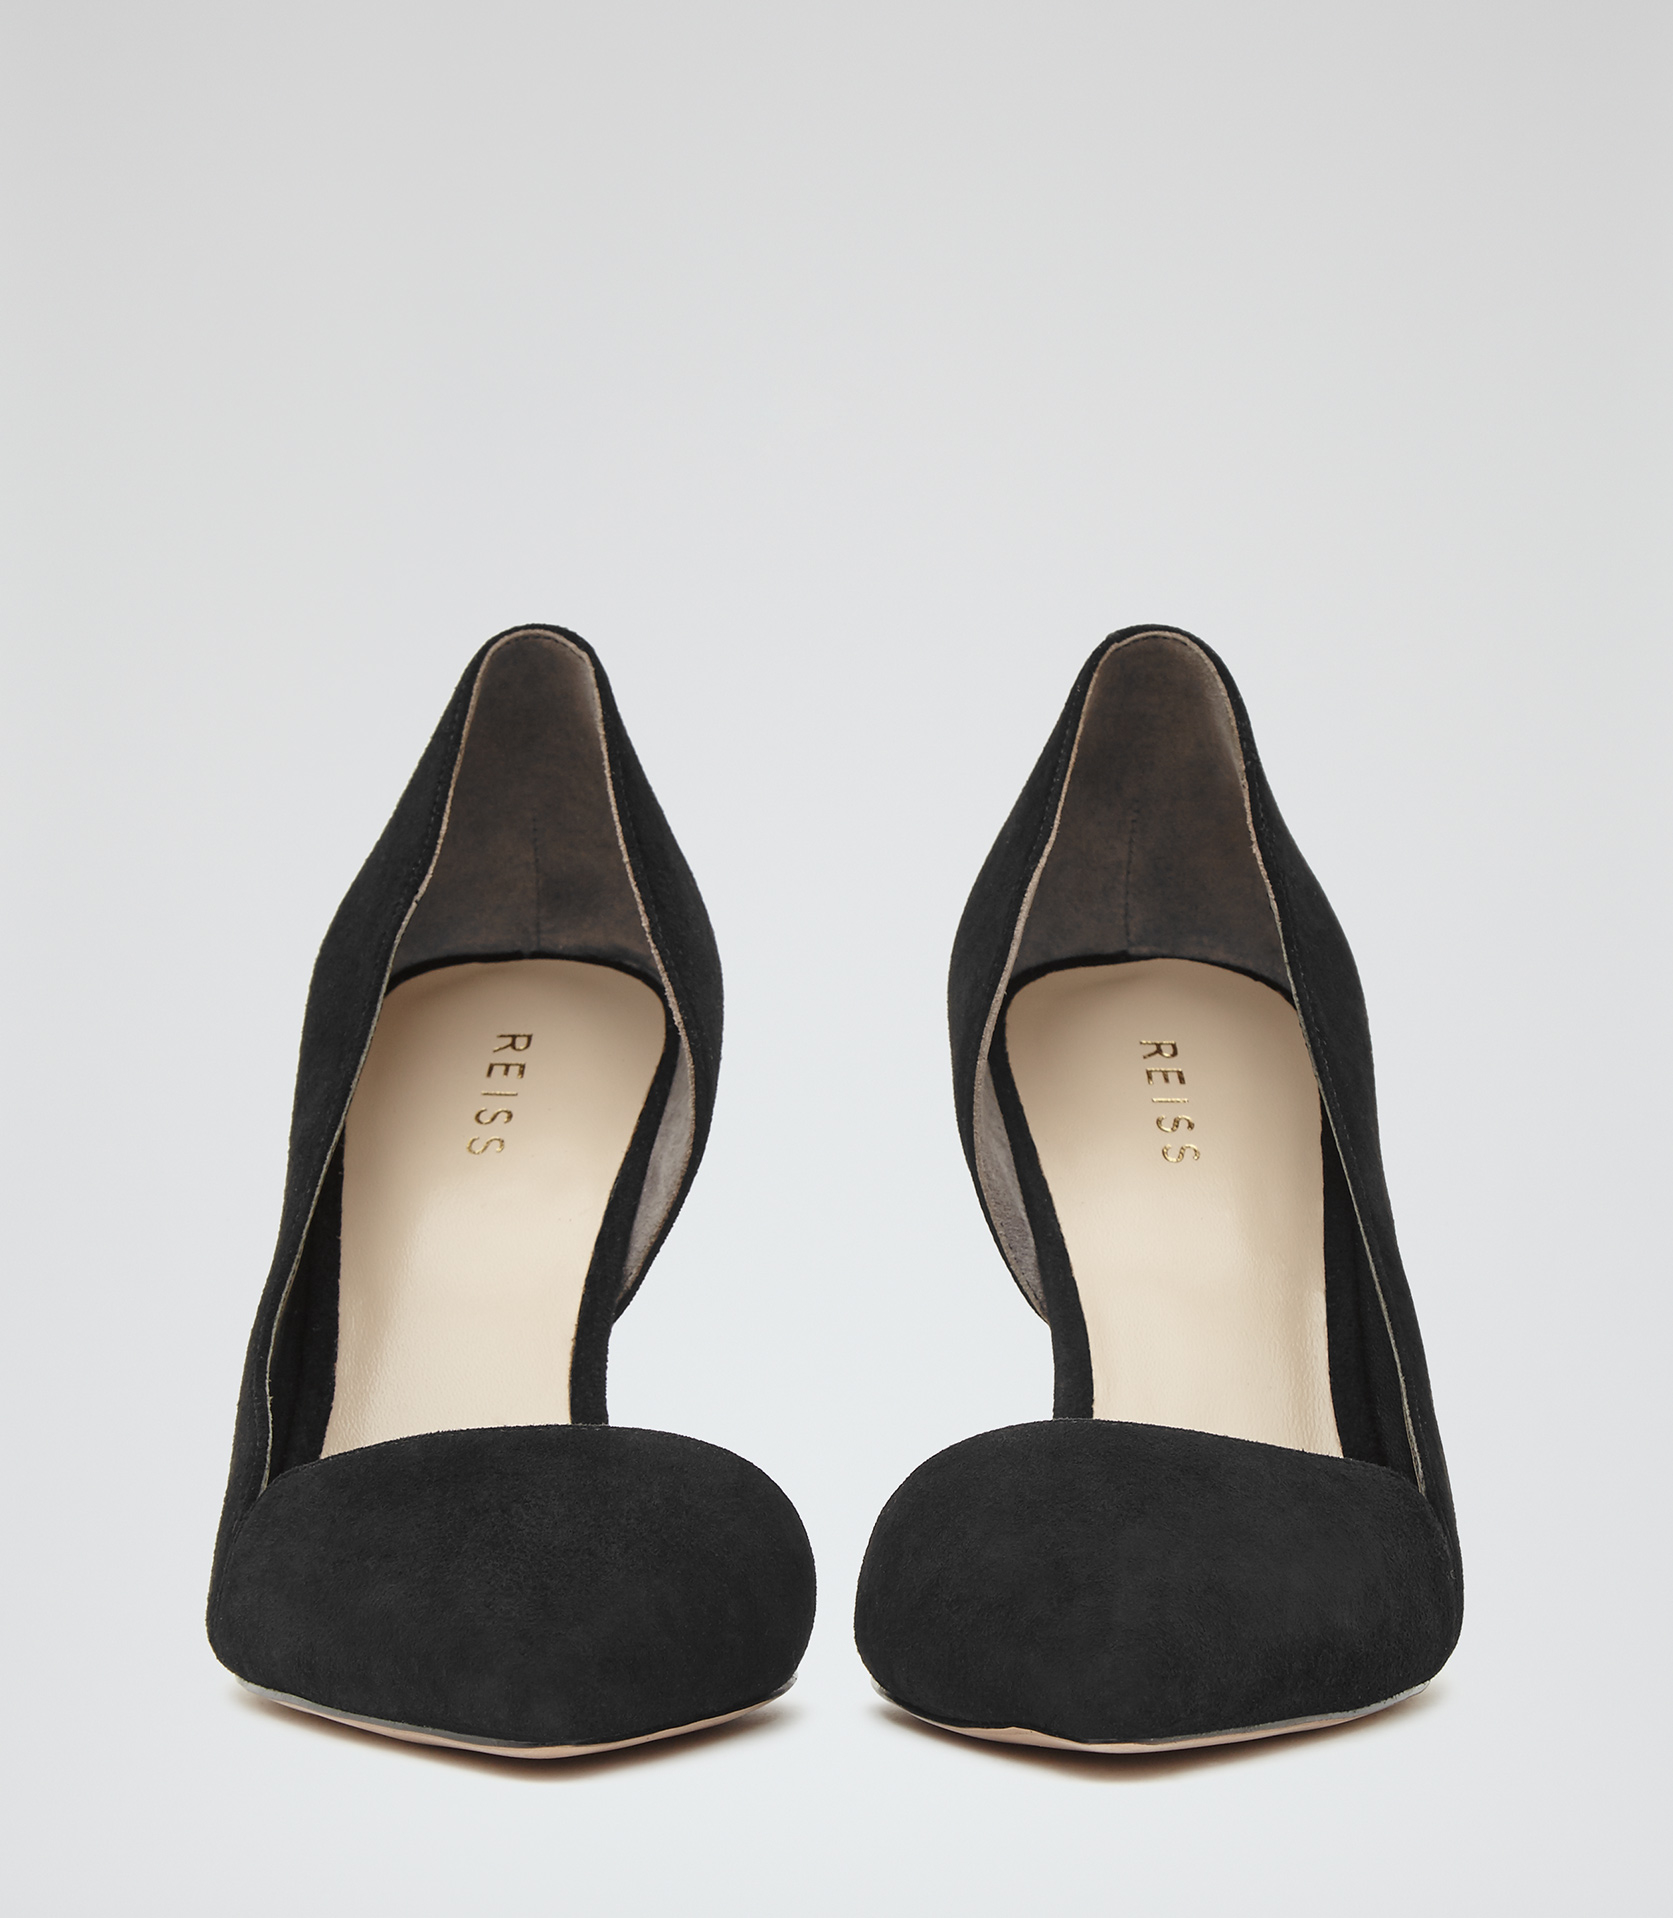 Reiss Venus Suede Court Shoes in Black - Lyst